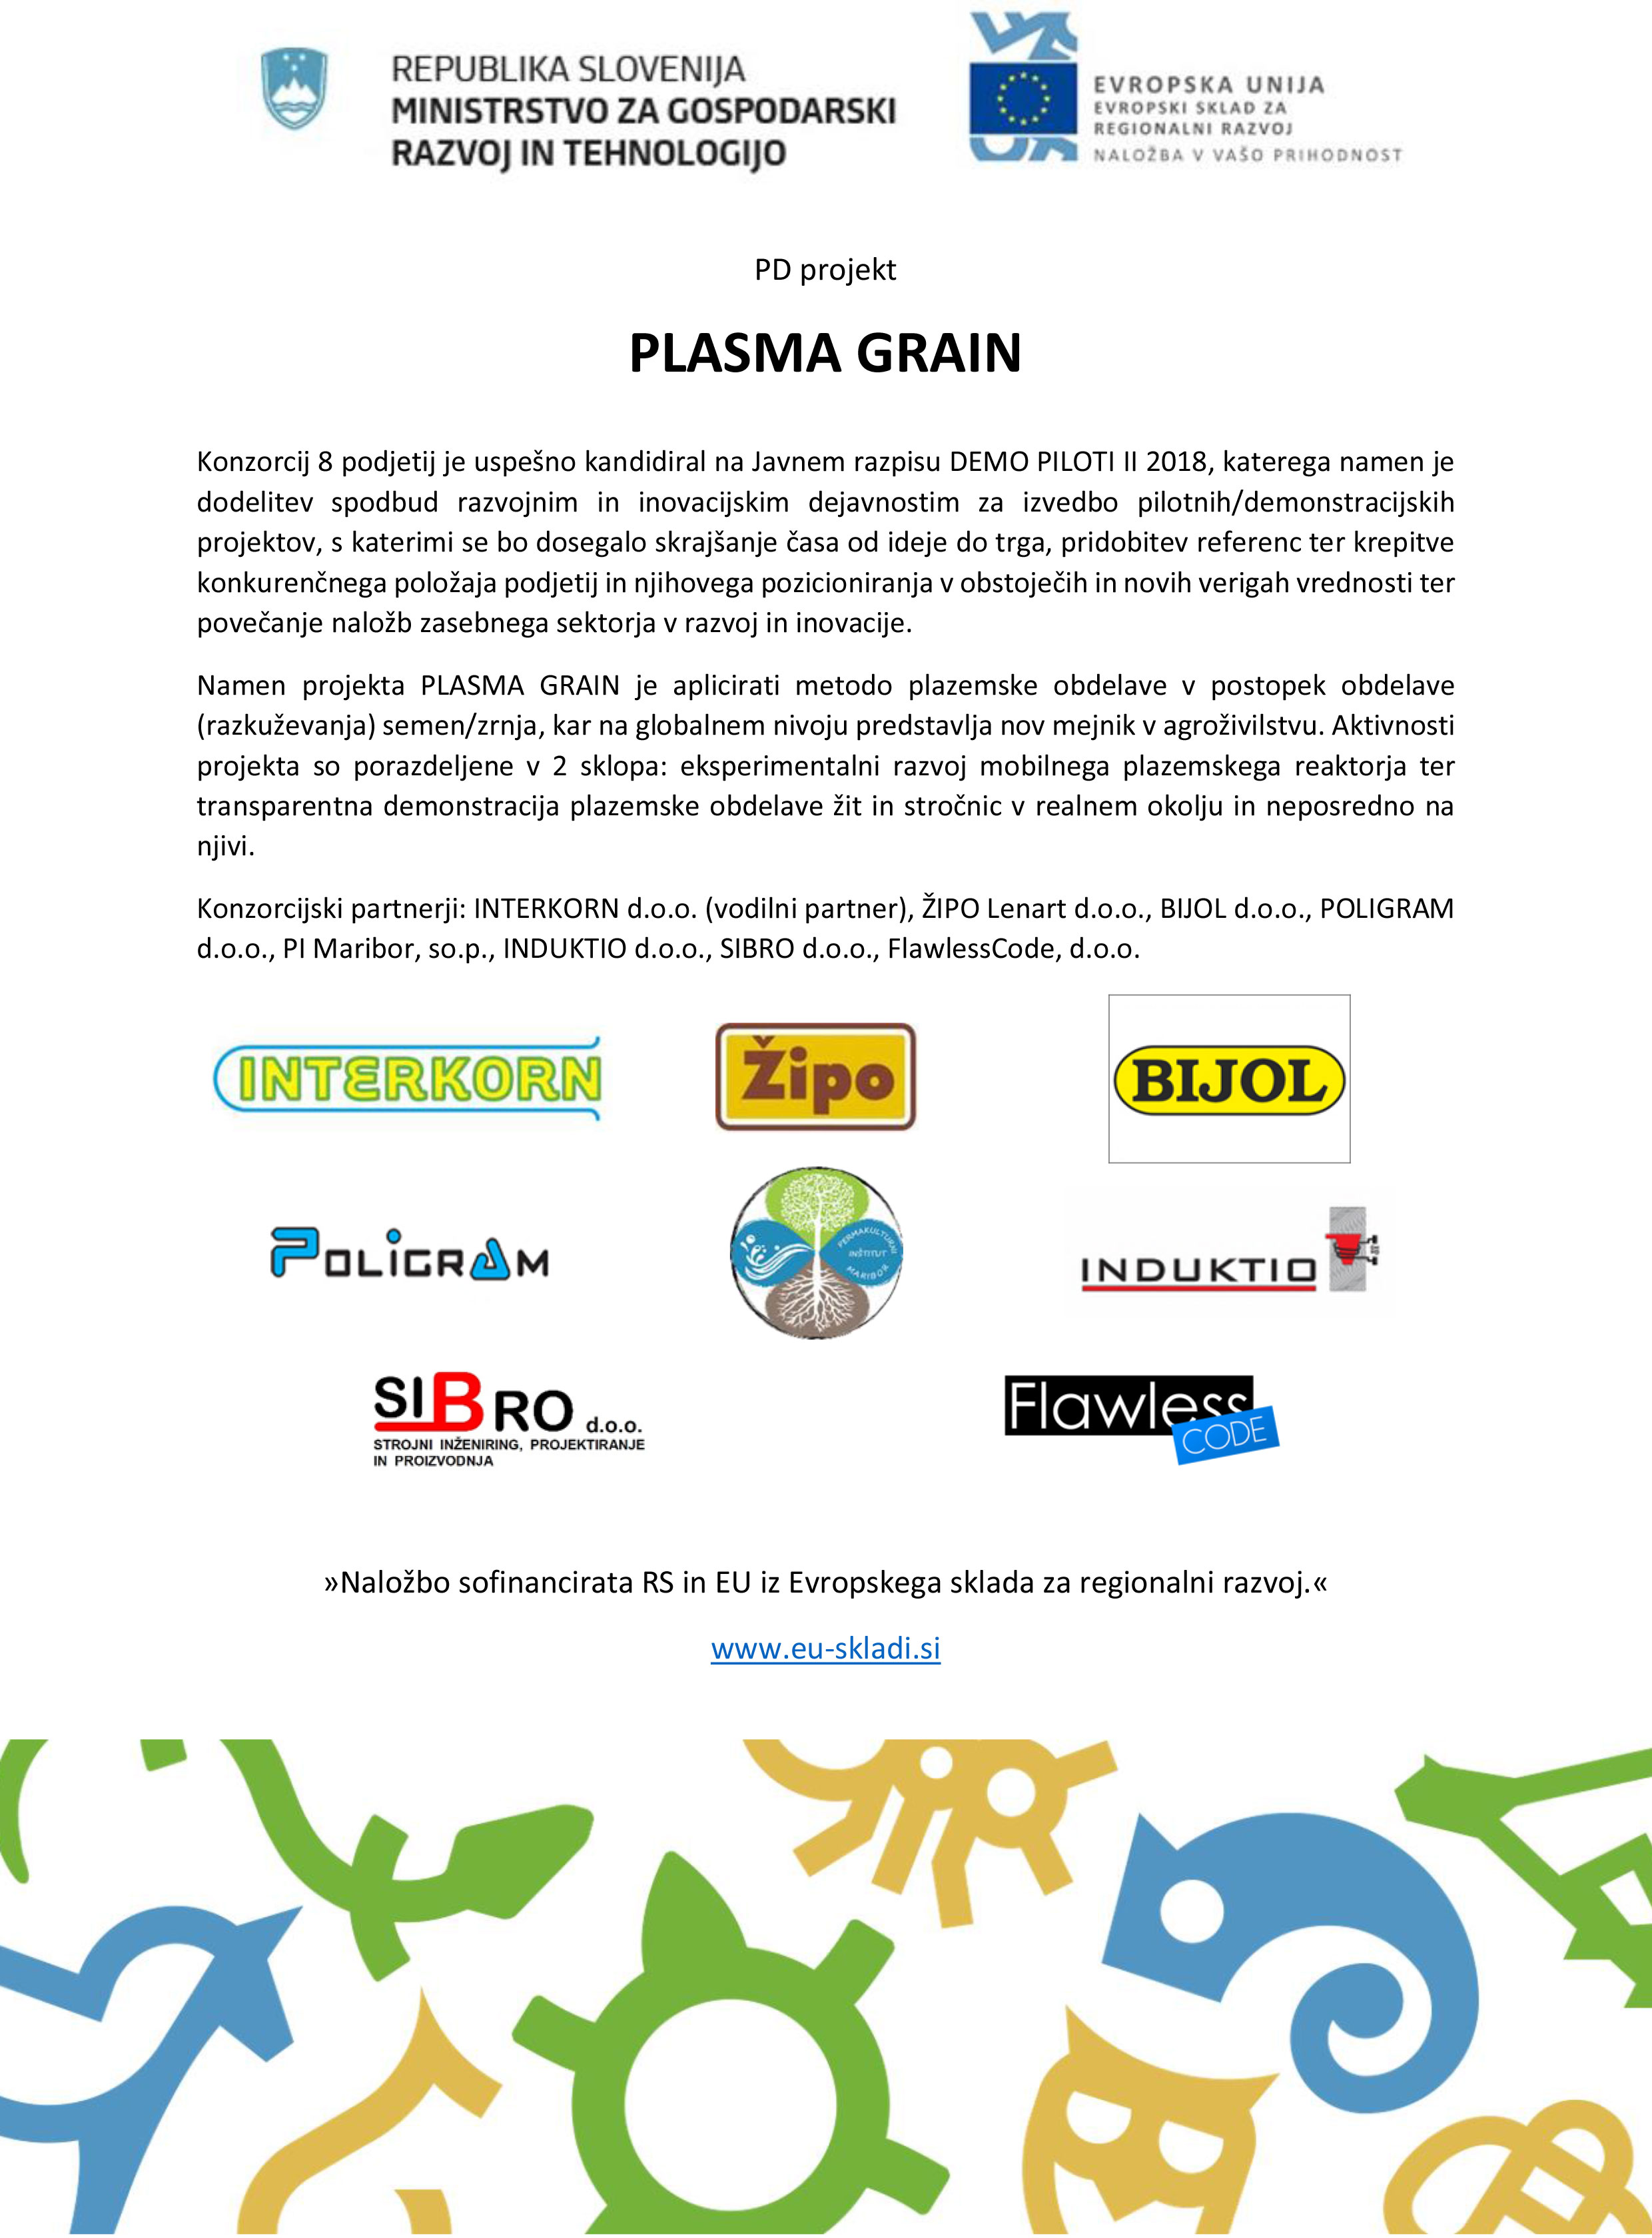 Project Plasma grain